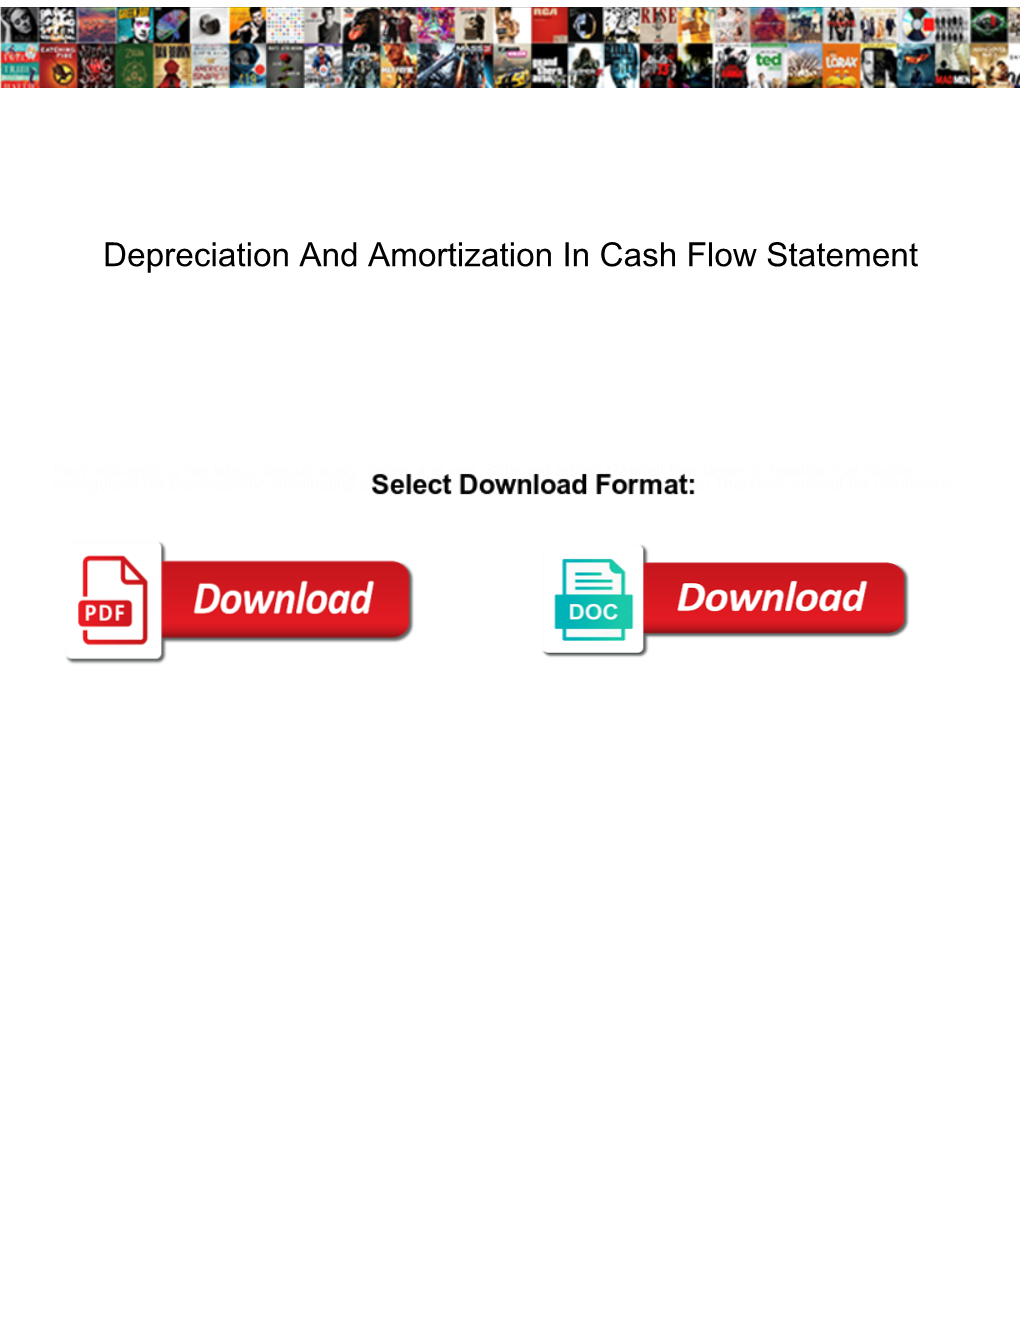 Depreciation and Amortization in Cash Flow Statement